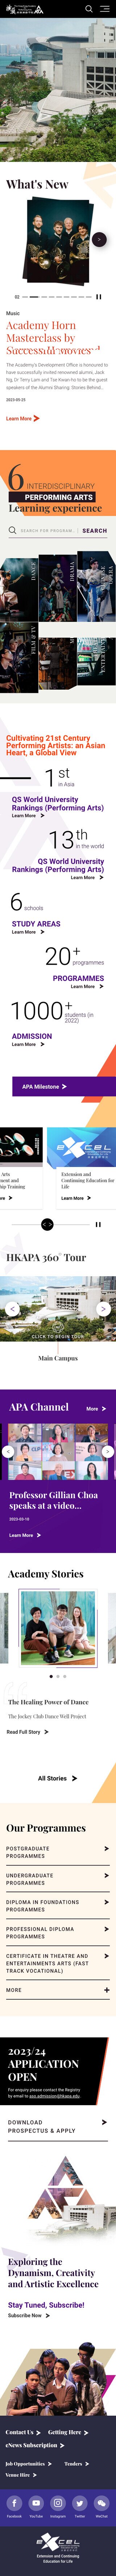 HKAPA Homepage - Mobile